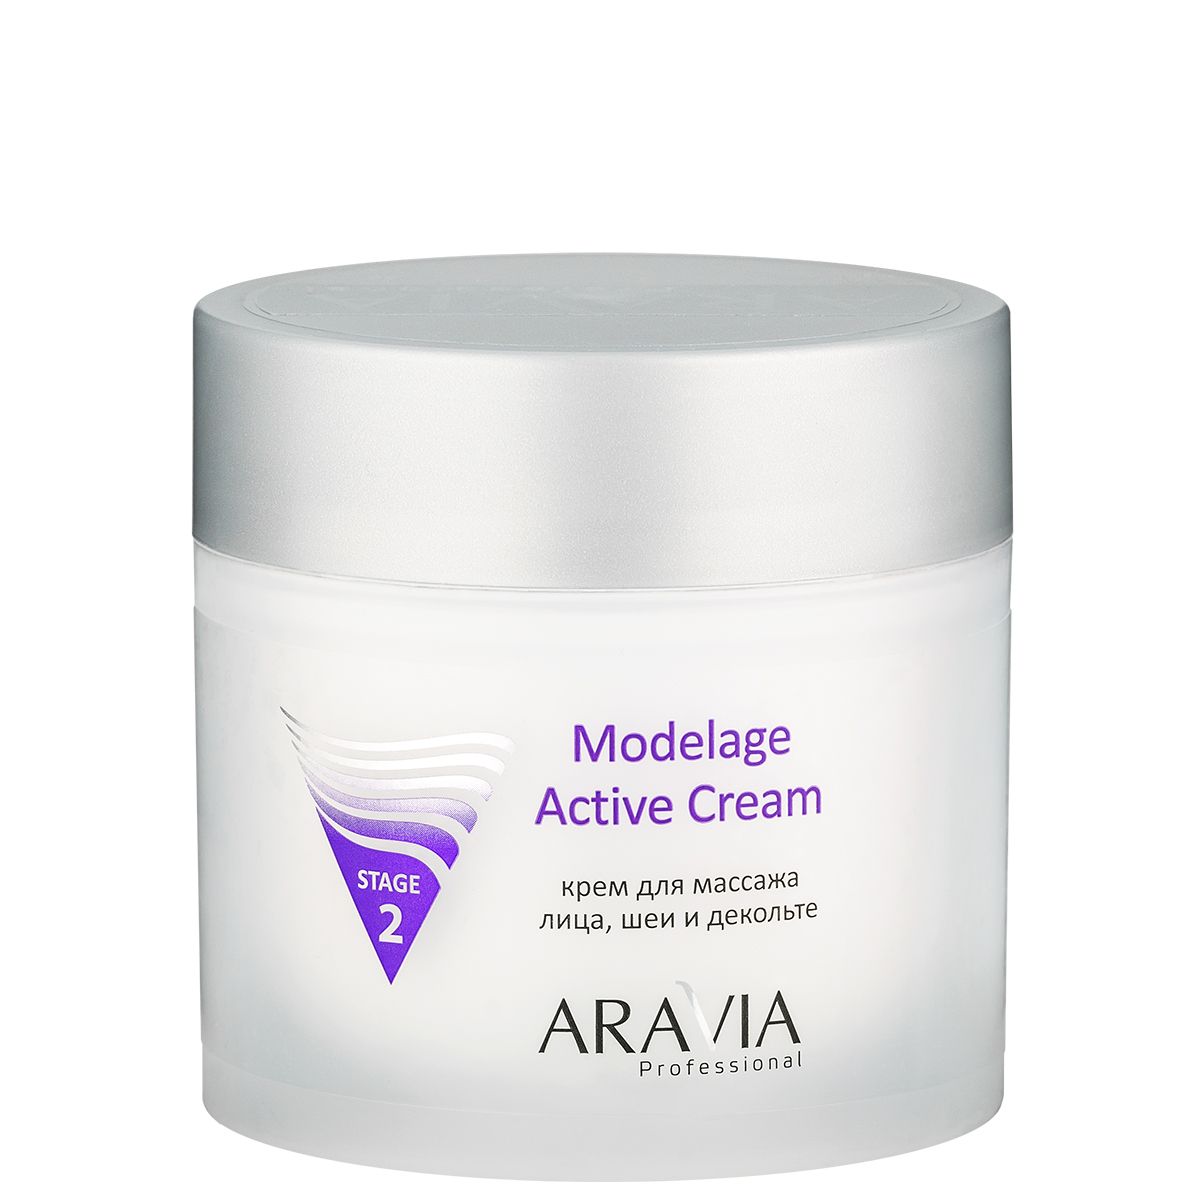 Aravia Professional Крем для массажа Modelage Active Cream, 300мл